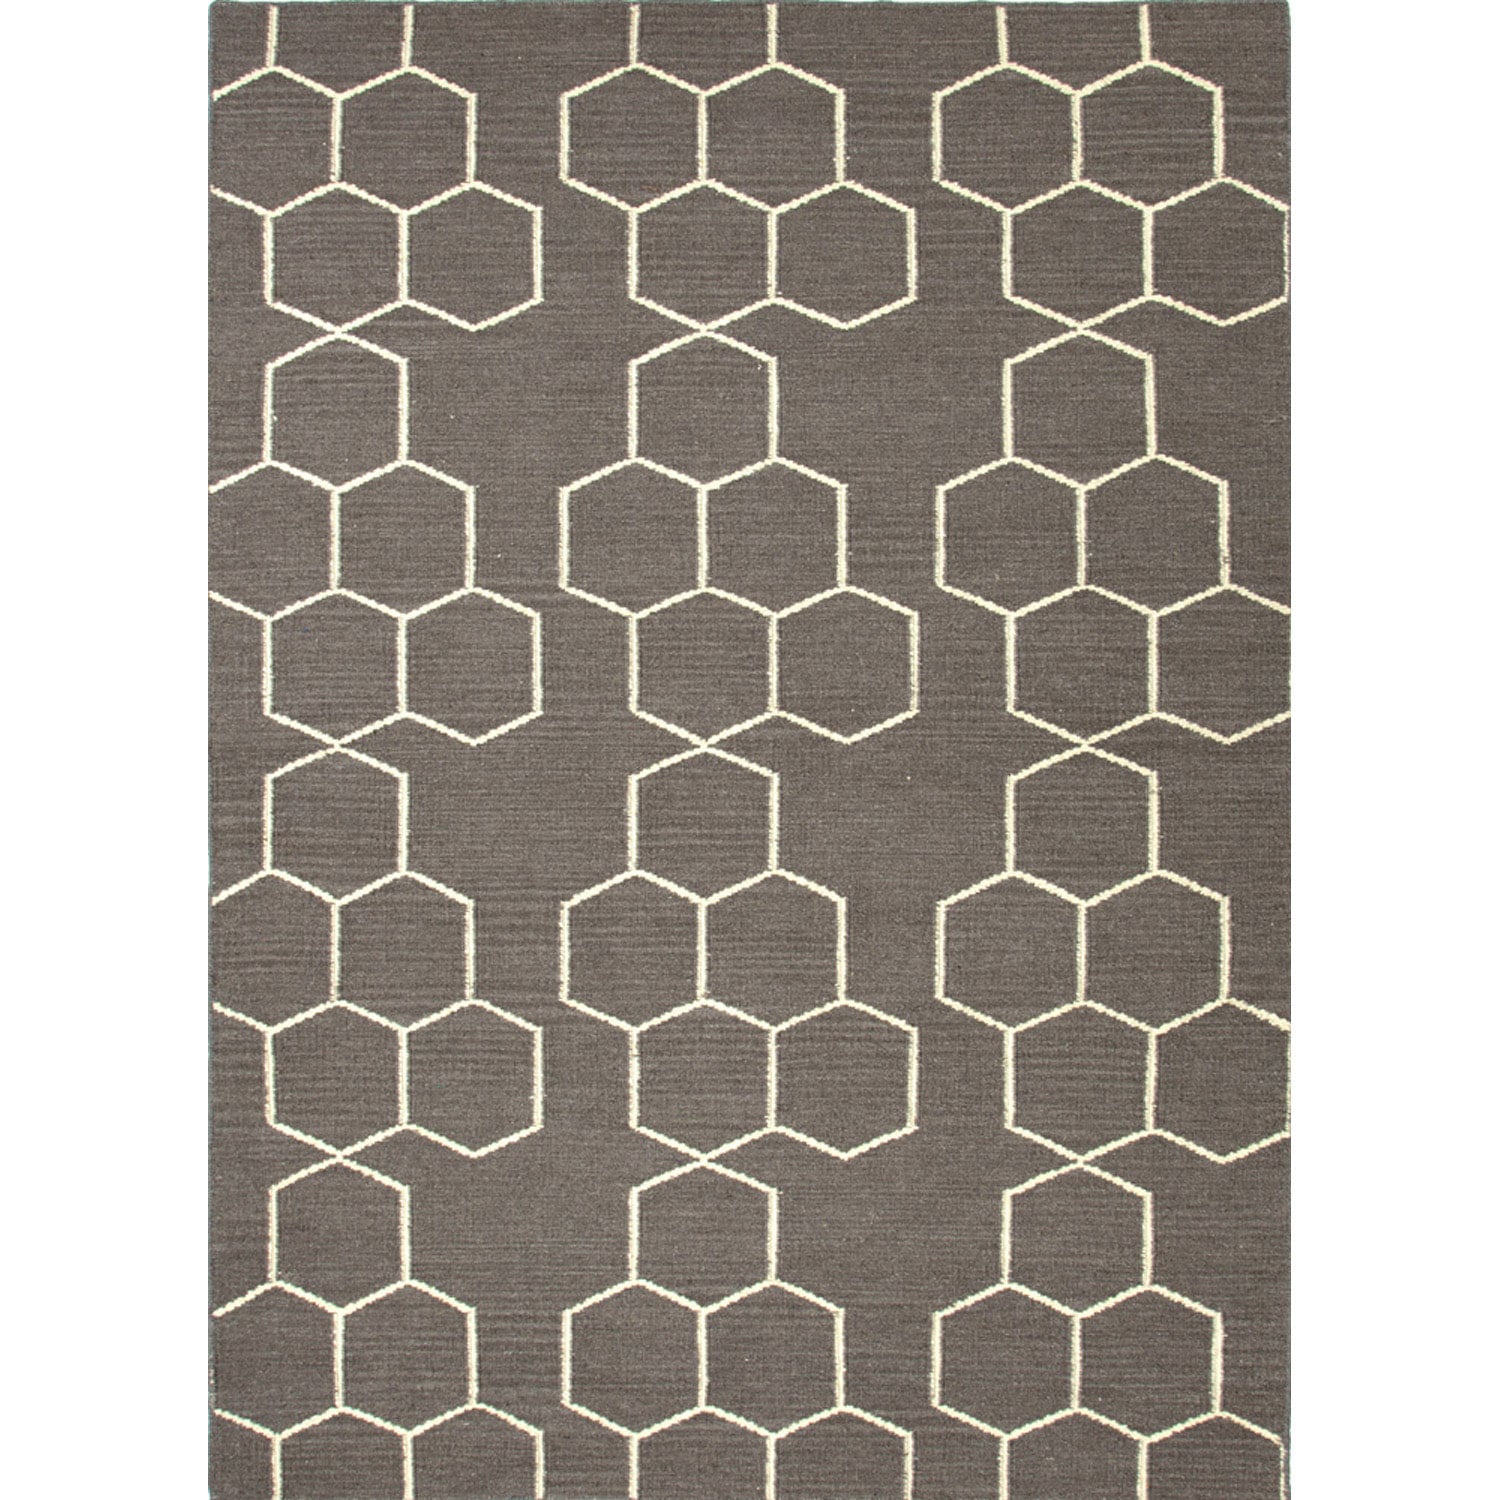 Handmade Flat weave Geometric pattern Gray/ Black Latex free Rug (2 X 3)